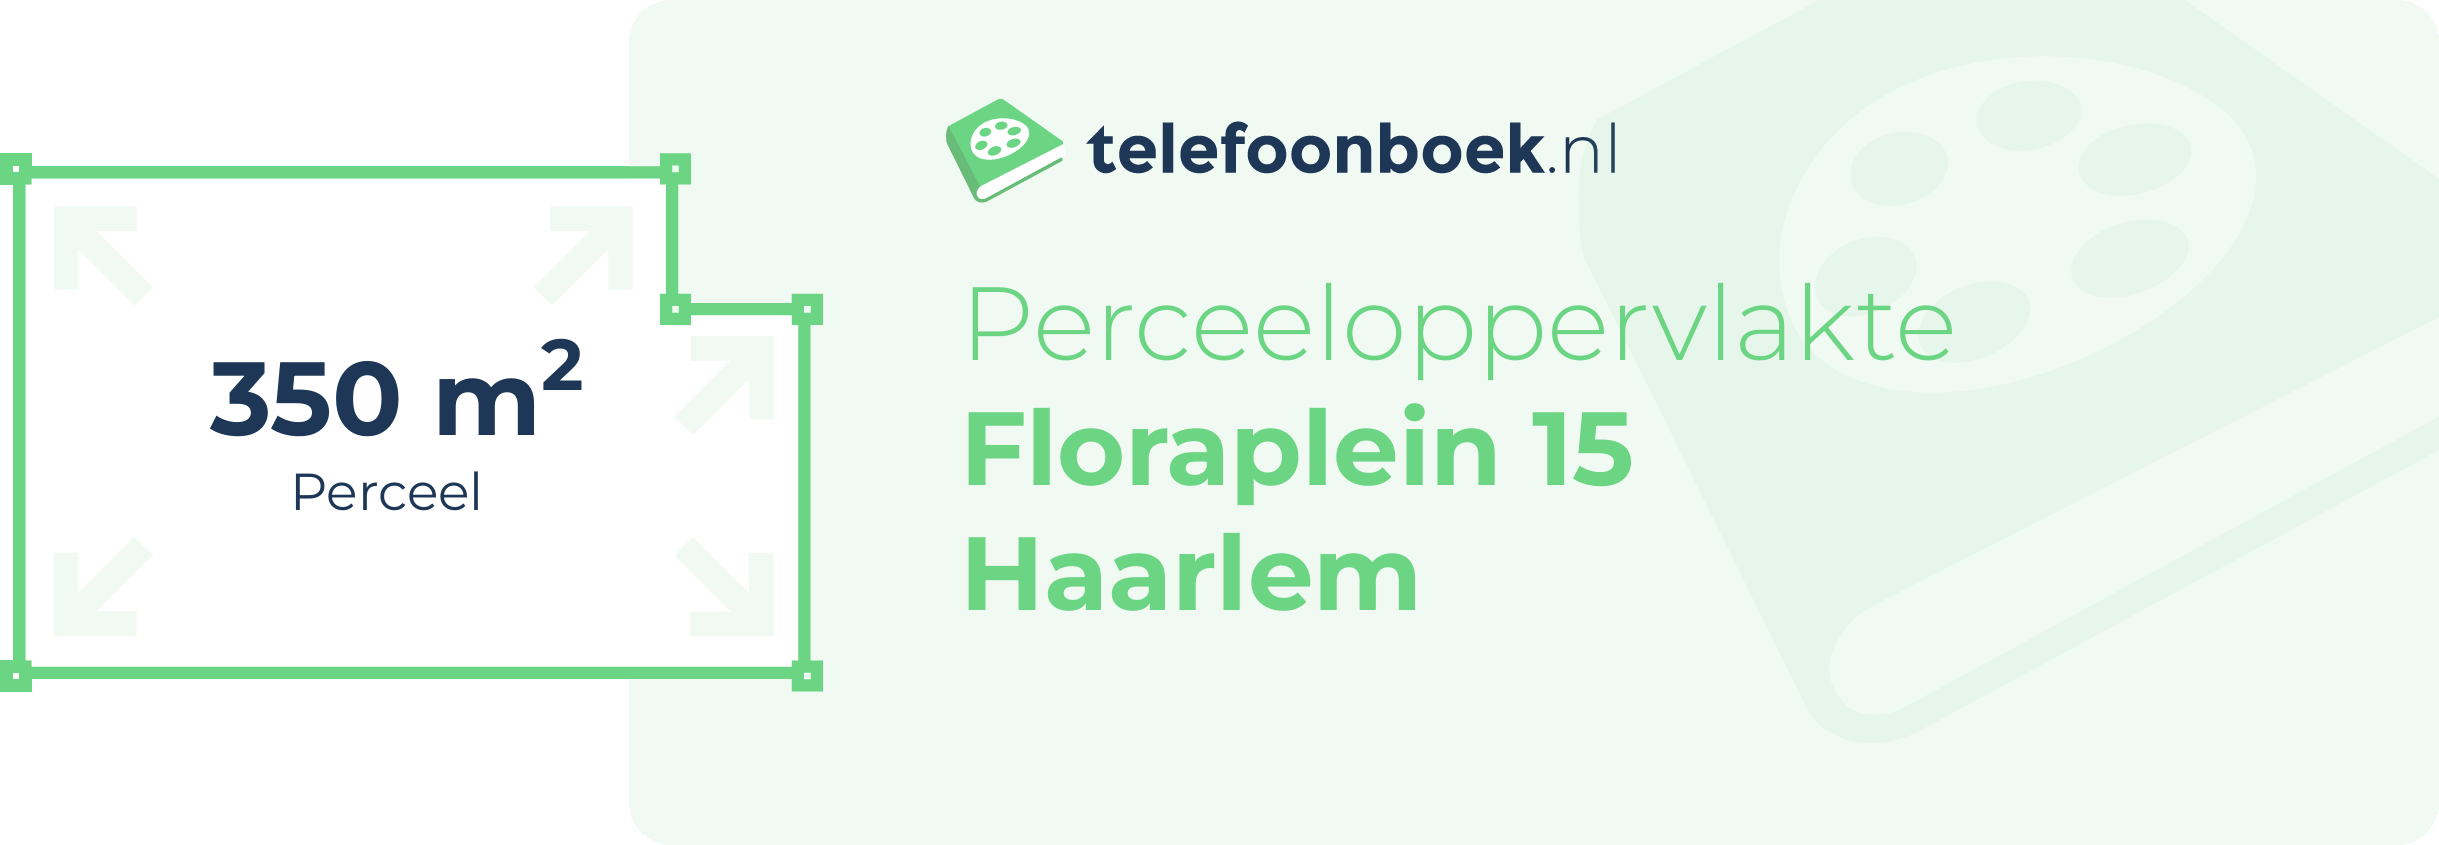 Perceeloppervlakte Floraplein 15 Haarlem